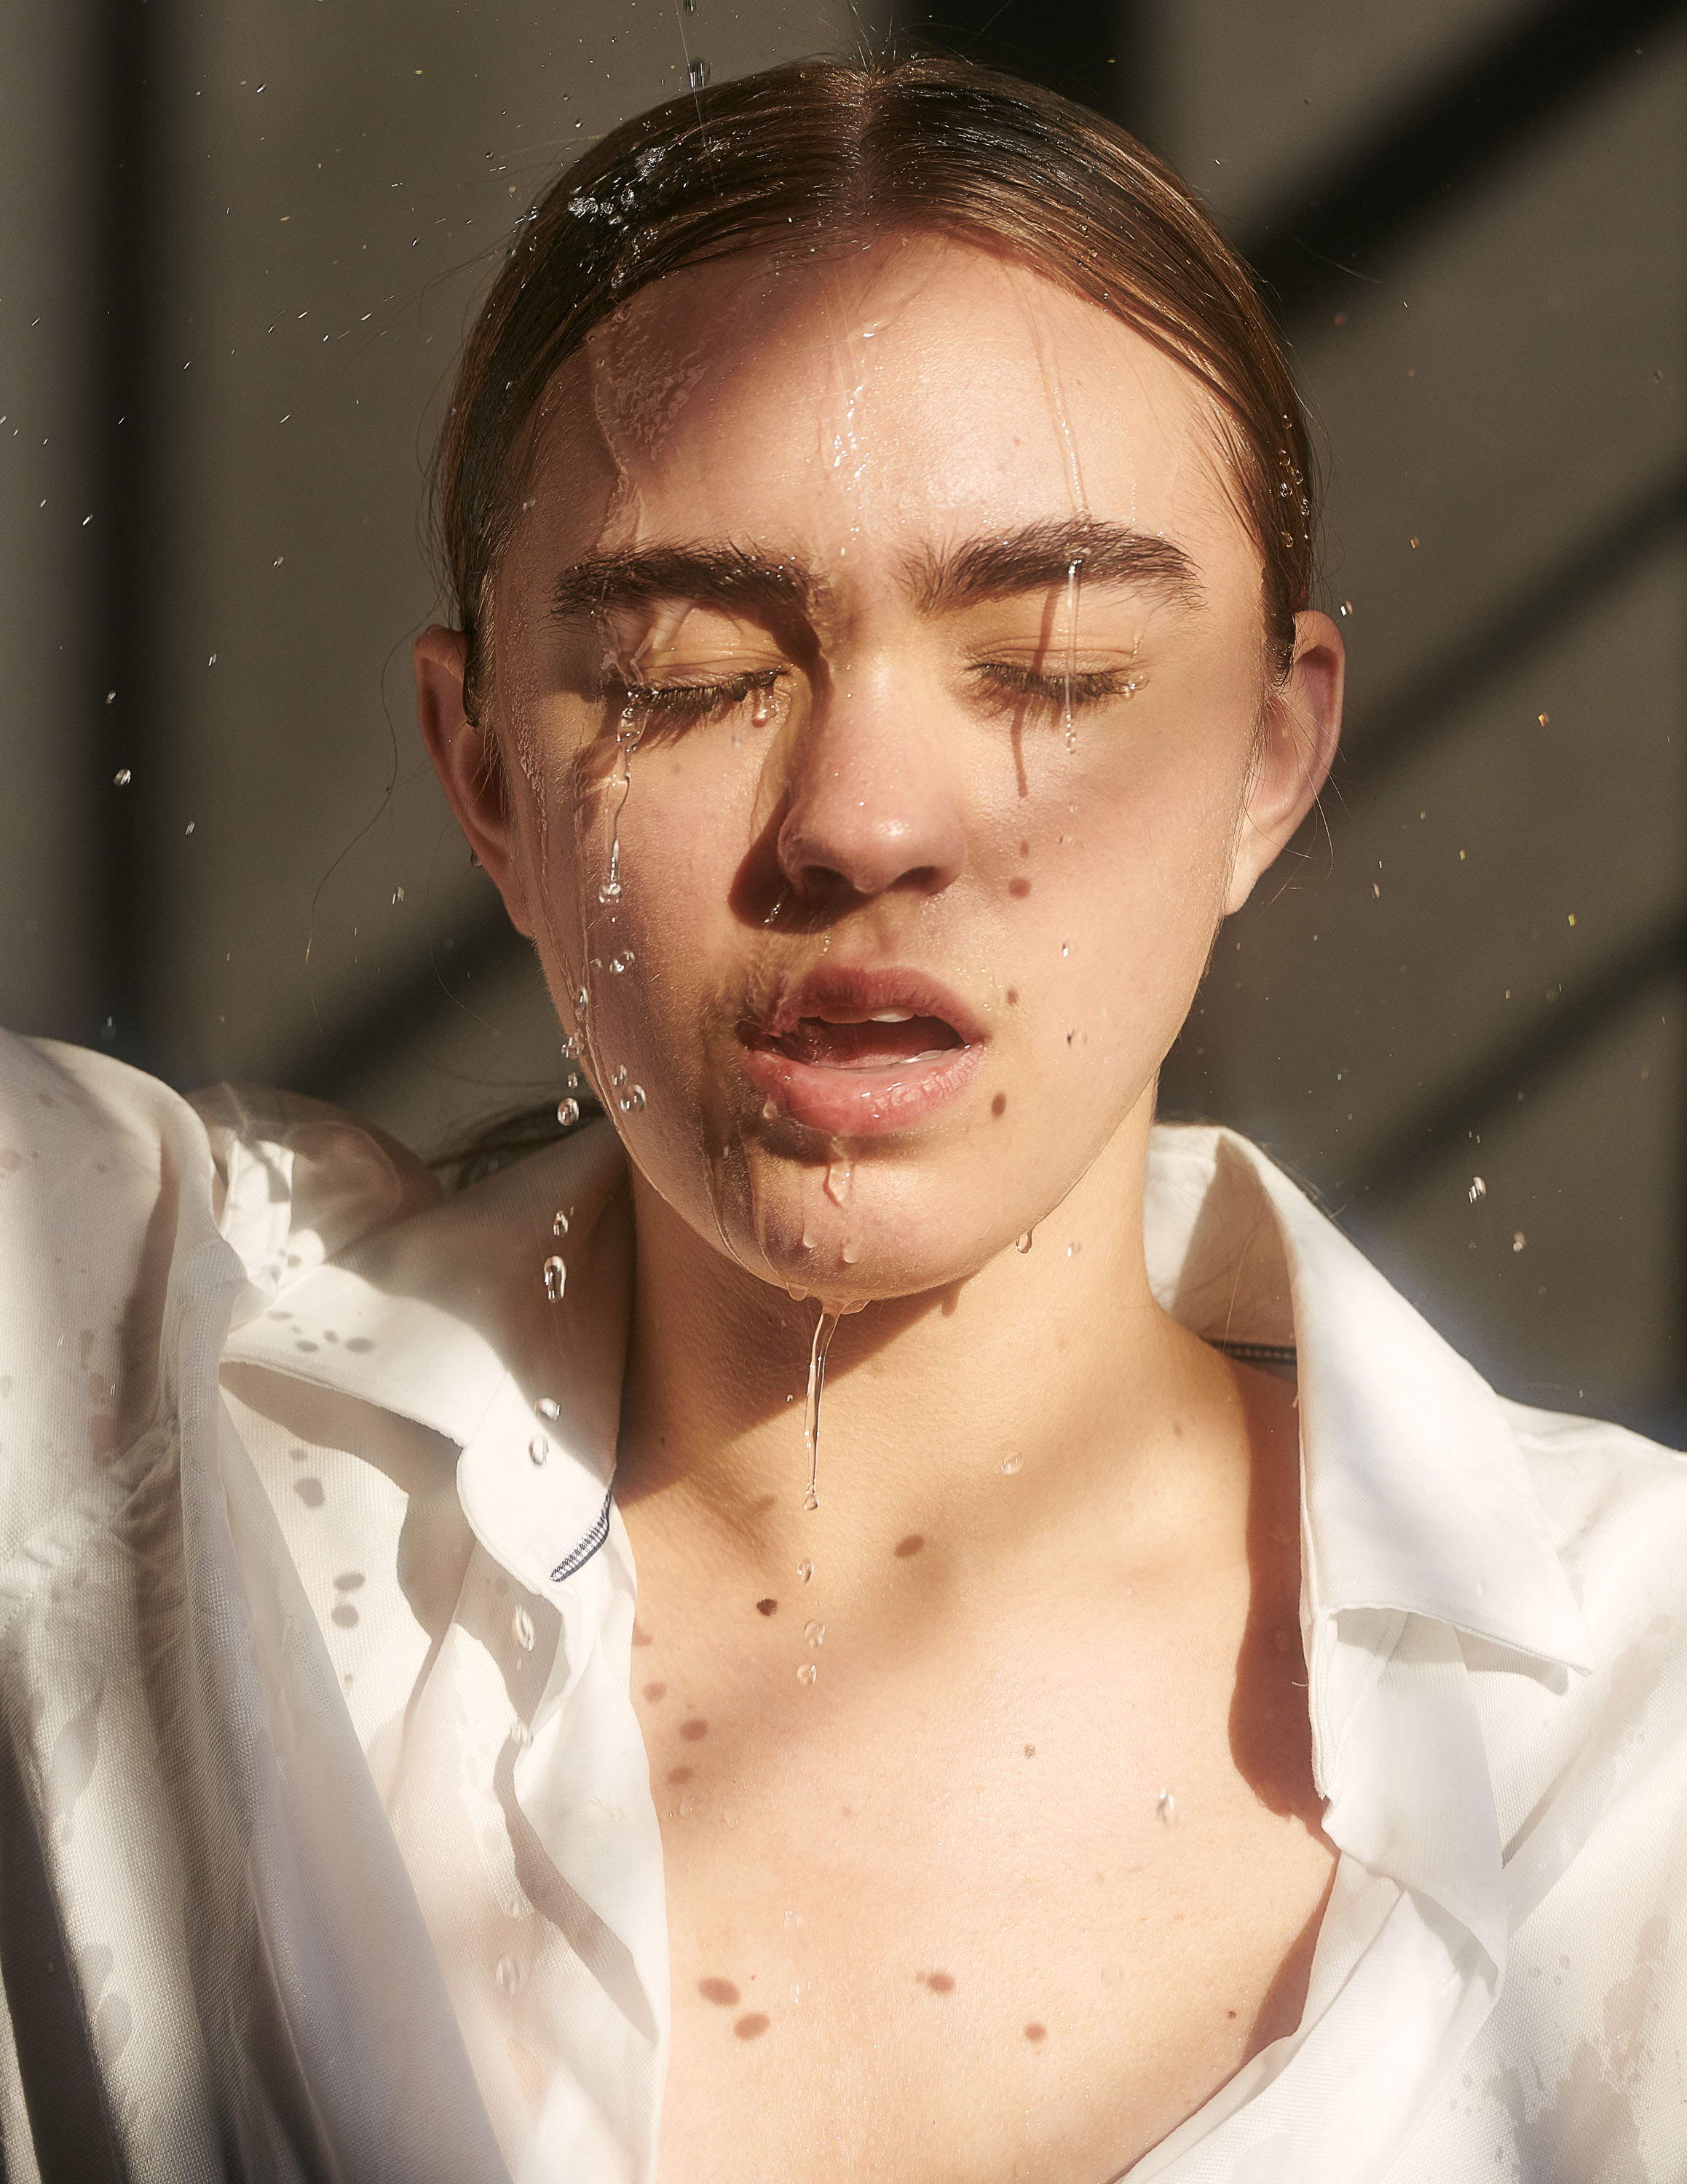 Genetic Model Rachel Hemstreet pouring water down on her face